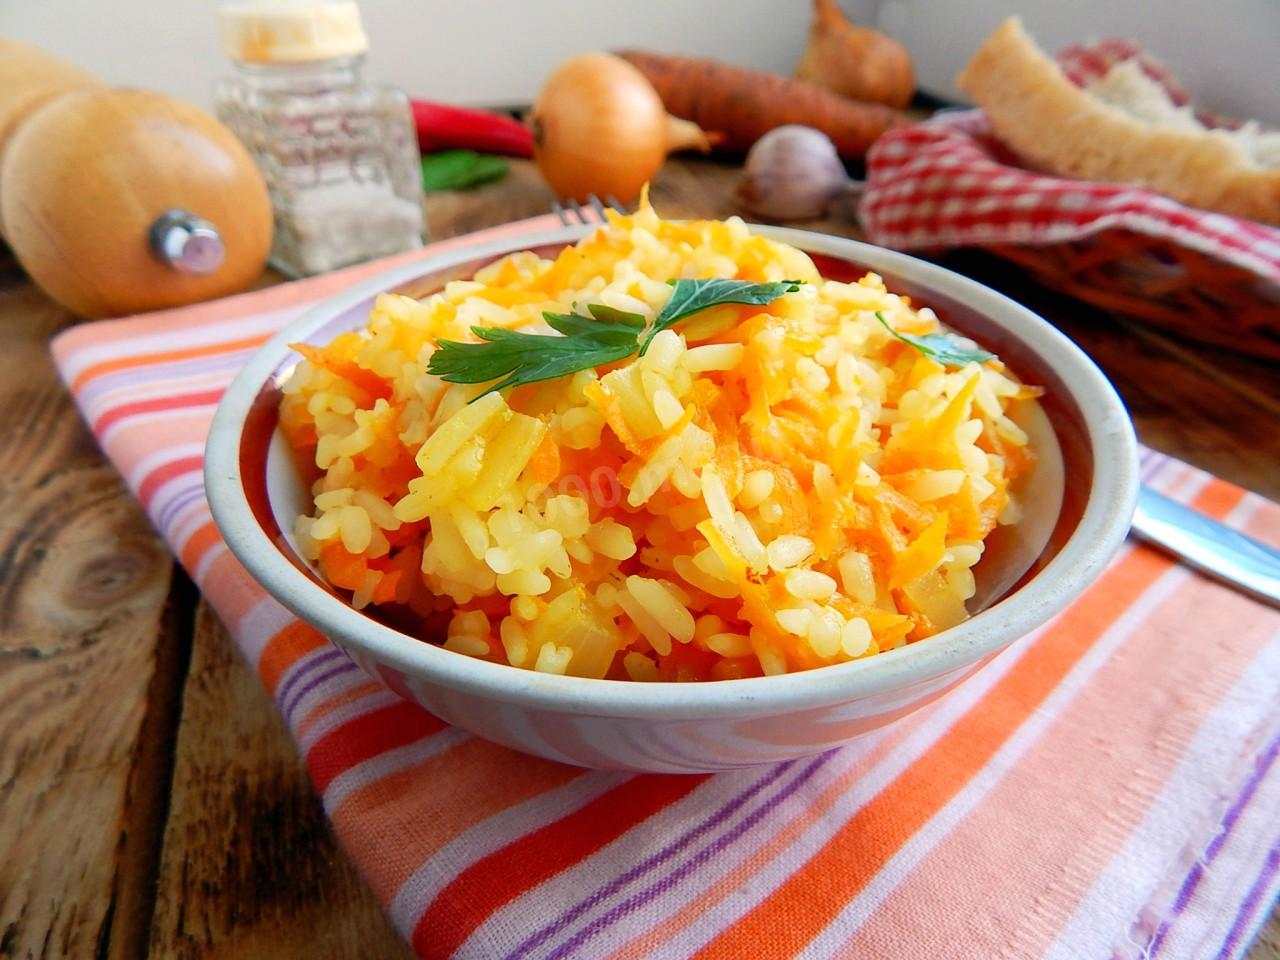 Плов с овощами на сковороде. Рис с морковью и луком. Рис с морковью и луком на сковороде. Рис припущенный с морковью. Рис с морковью на гарнир.